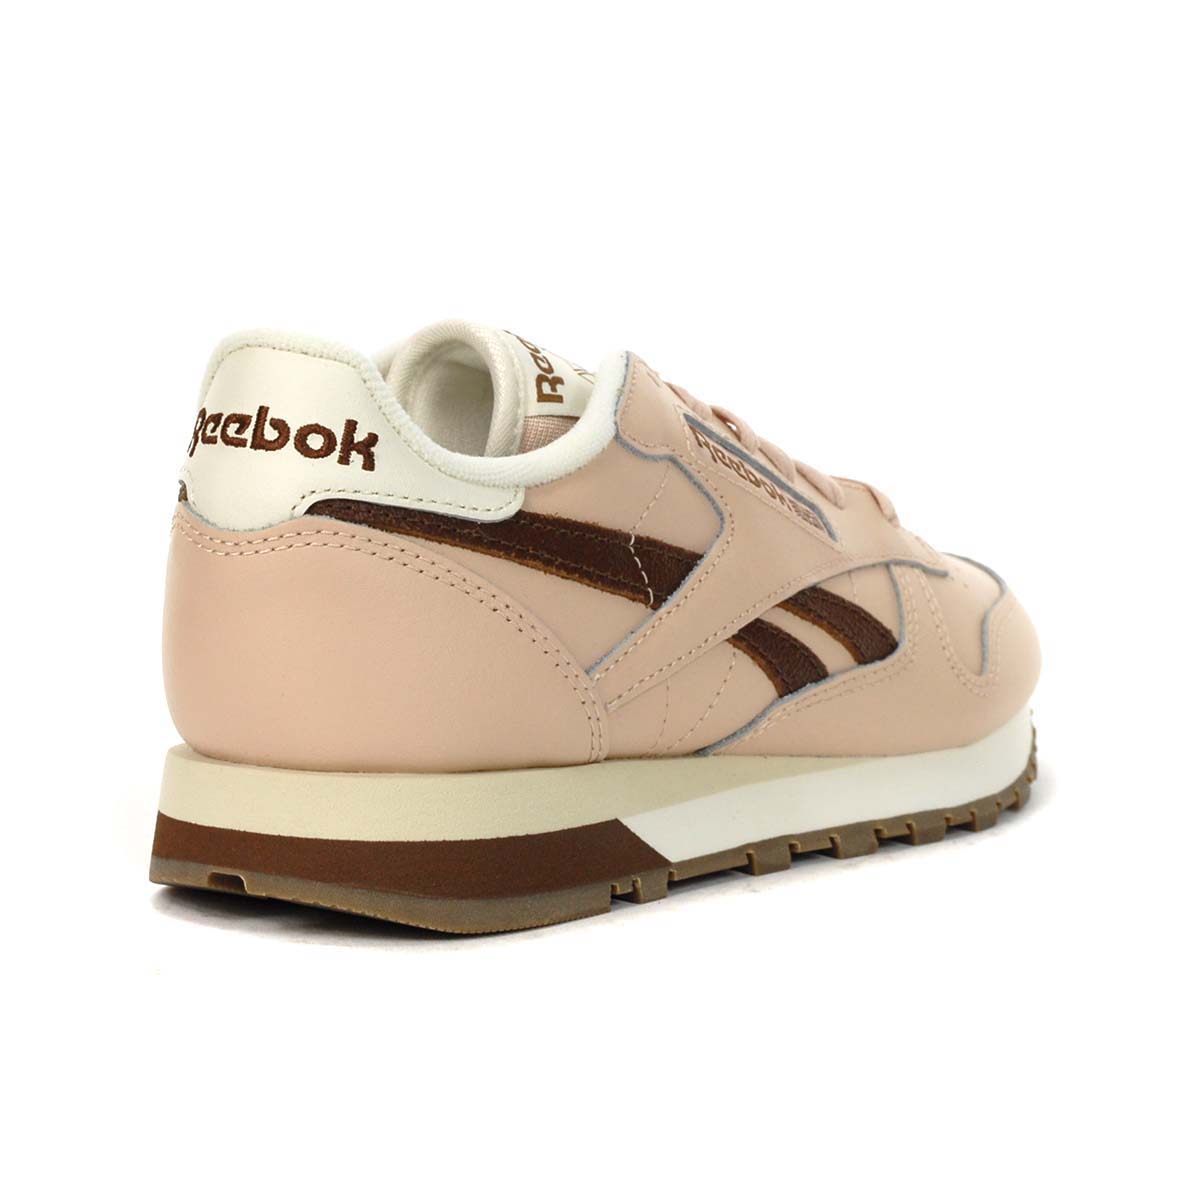 Reebok Women's Classic Leather Soft Ecru/Brush Brown/Chalk Sneakers ...